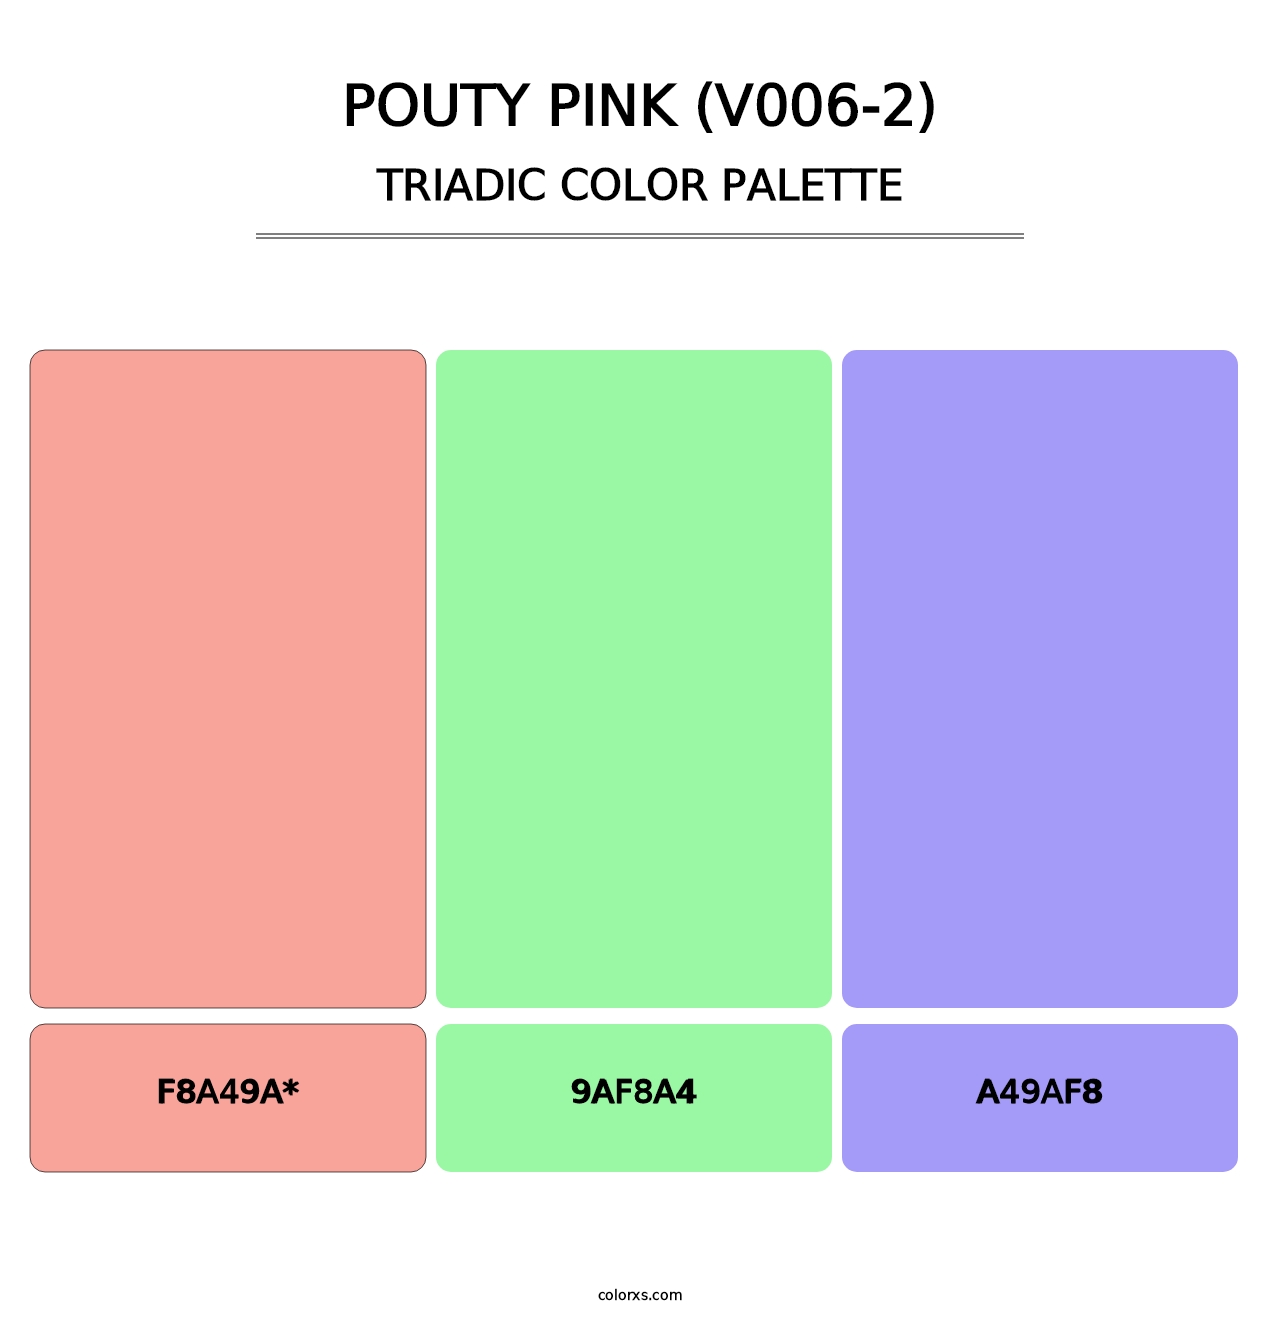 Pouty Pink (V006-2) - Triadic Color Palette